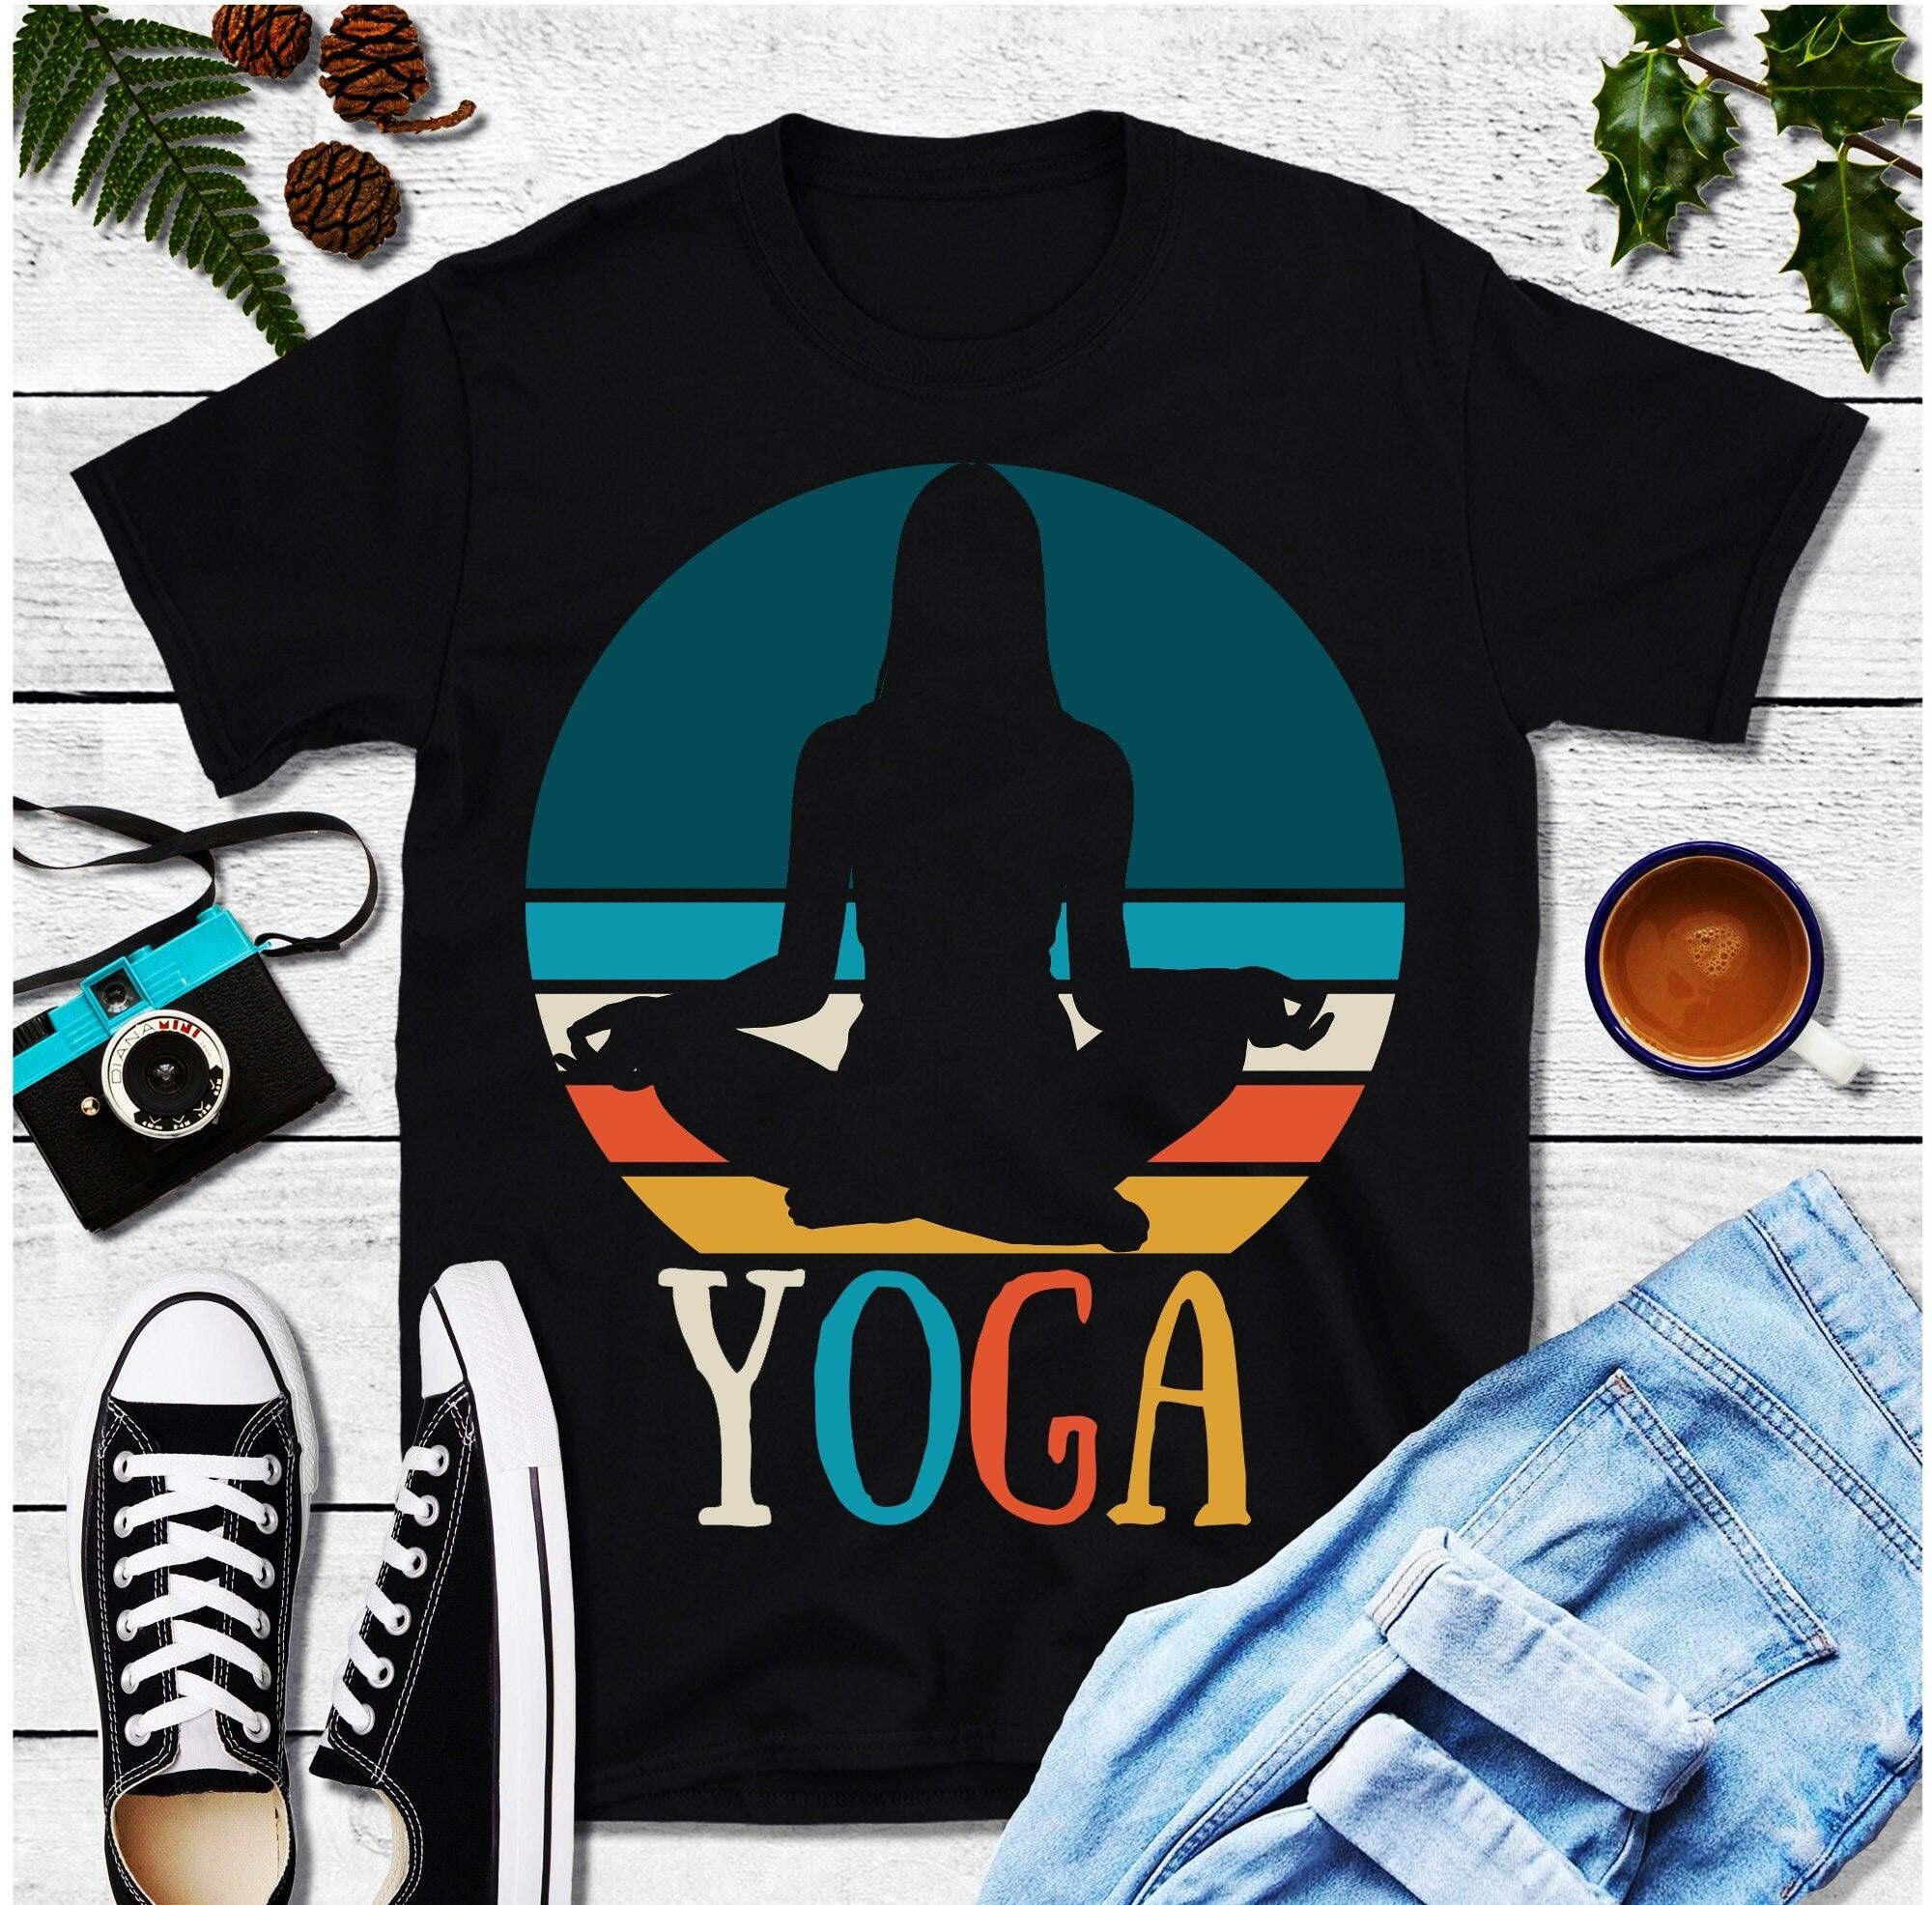 Yoga jente | Retro solnedgang-t-skjorter, yoga-gaveskjorte, Namaste-skjorte, gave til yogi, yogaelskerskjorte, meditasjonsskjorte, yoga-t-skjorte, yoga-t-skjorte - plusminusco.com